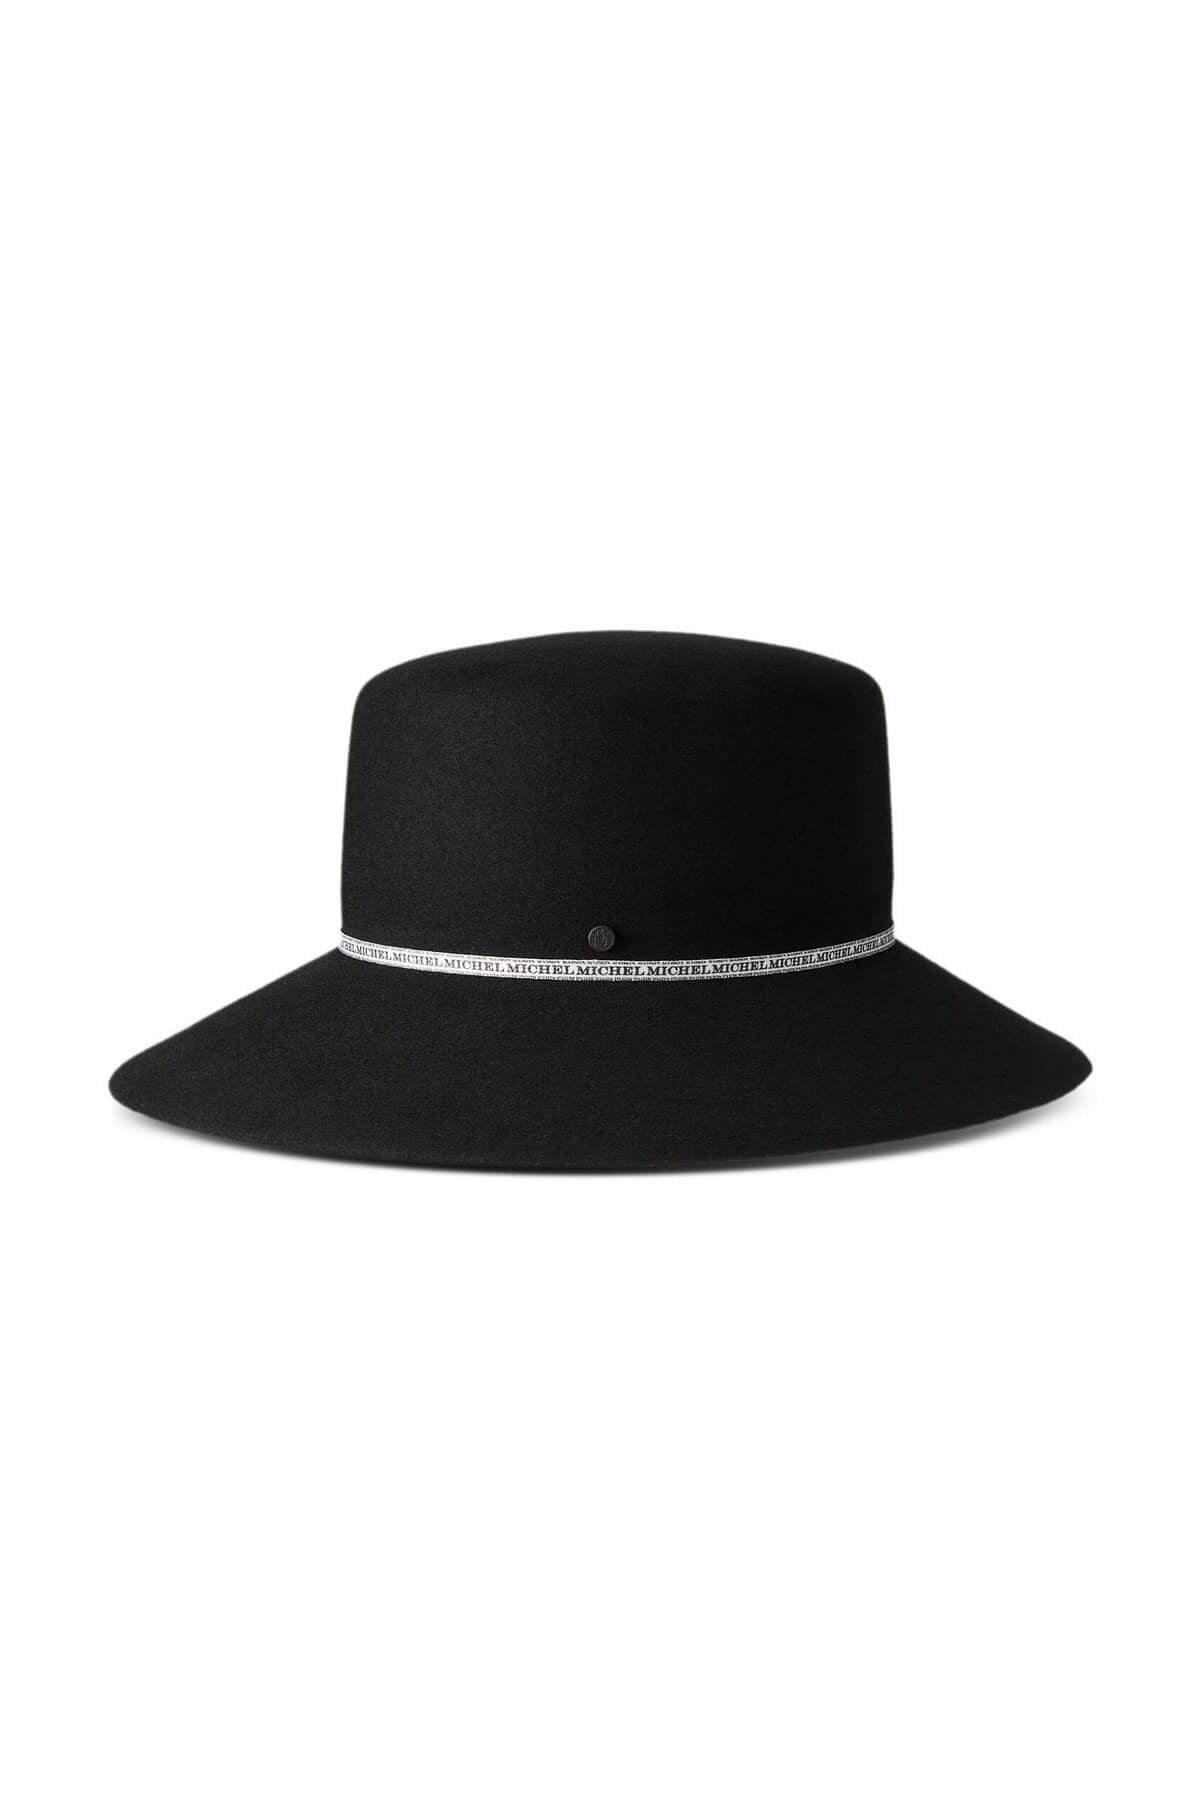 Maison Michel New Kendall On-The-Go Felt Hat - Black